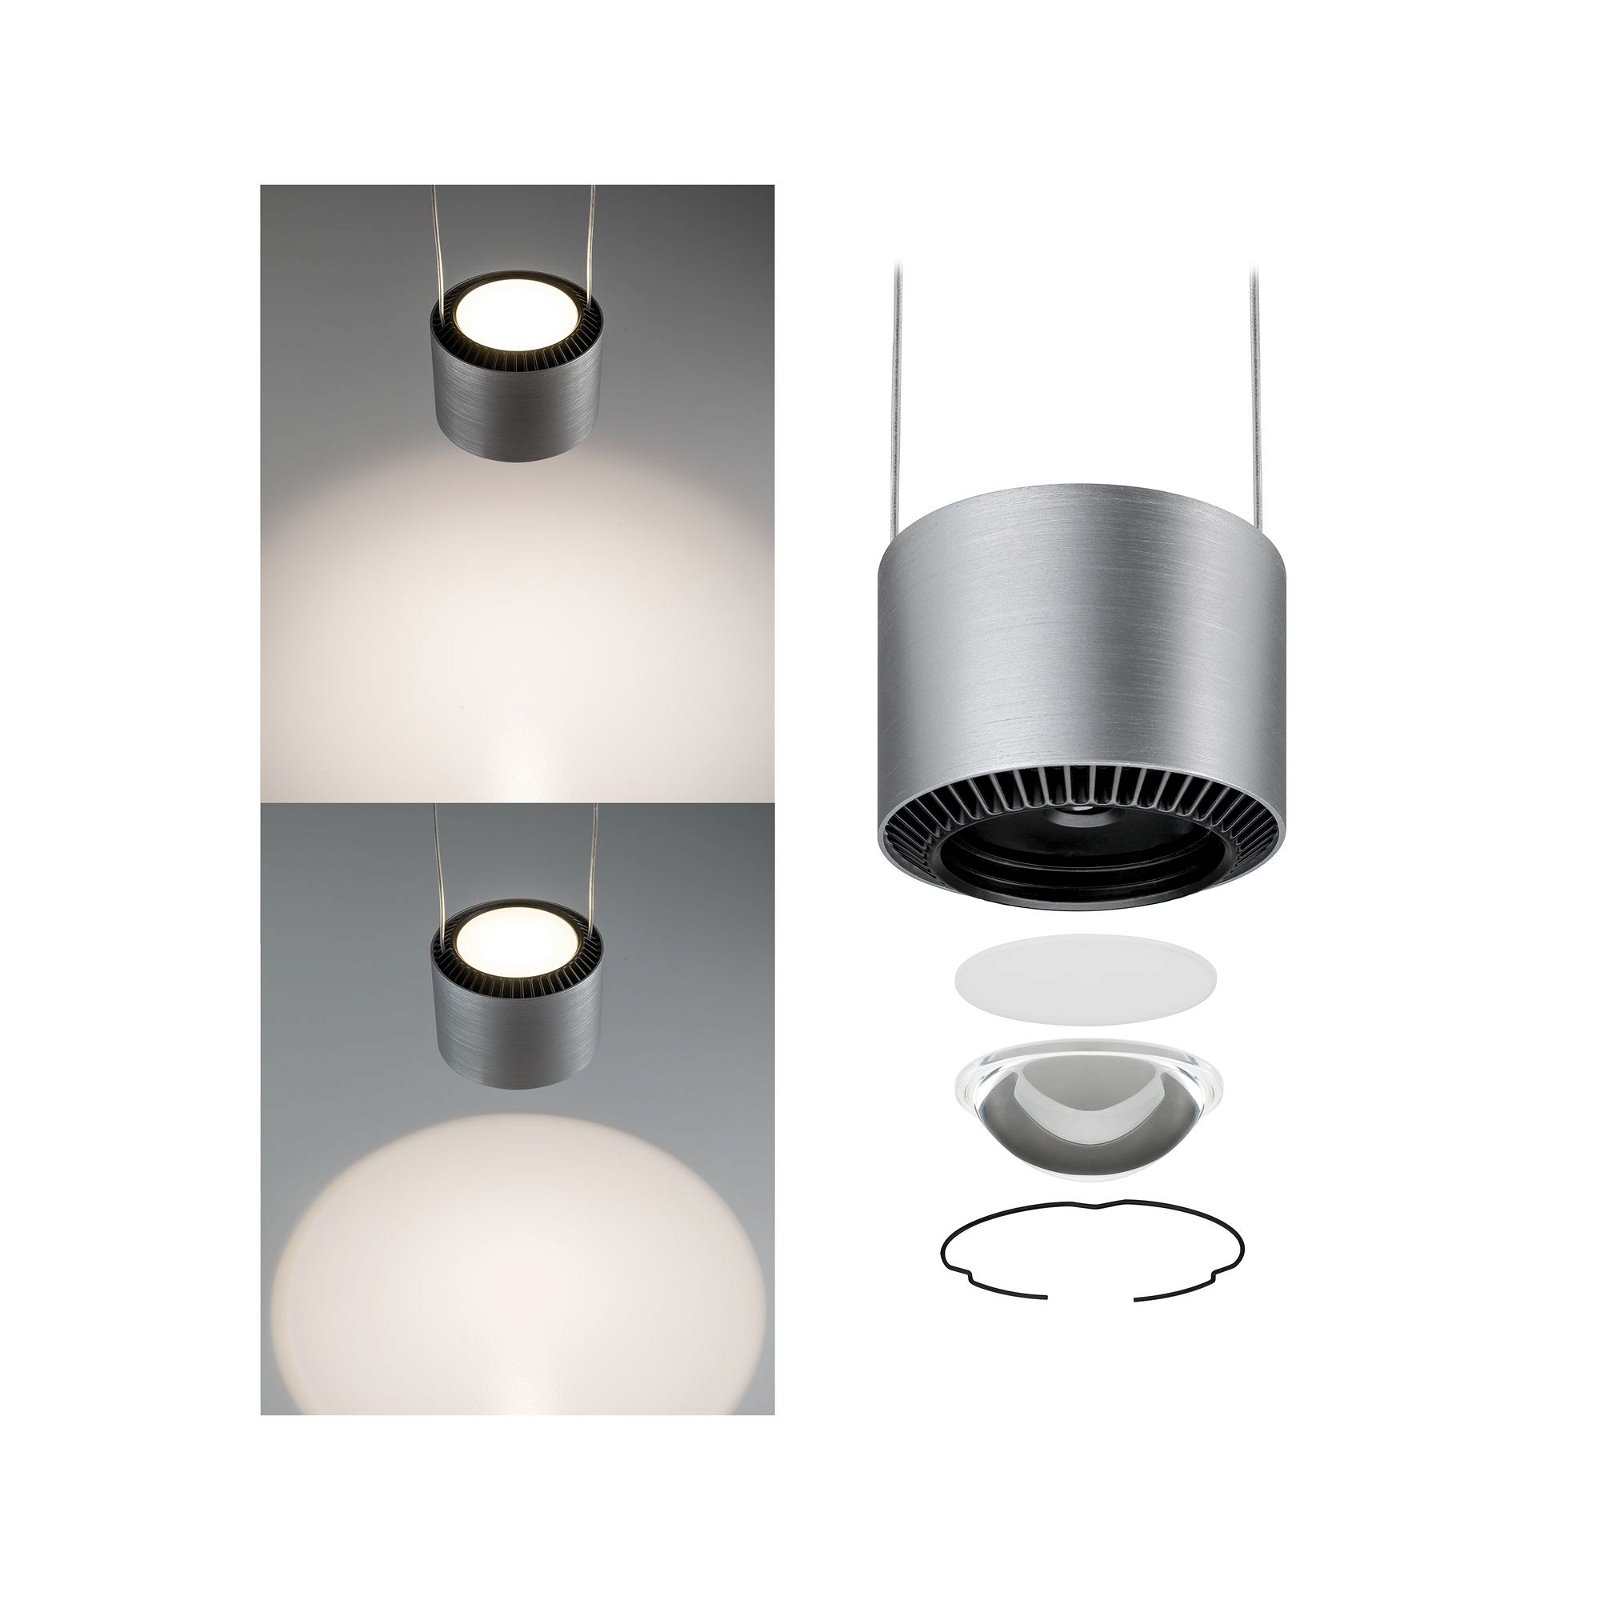 Aldan LED pendant luminaire 3-lamp 3x9W Black/brushed aluminium dimmable